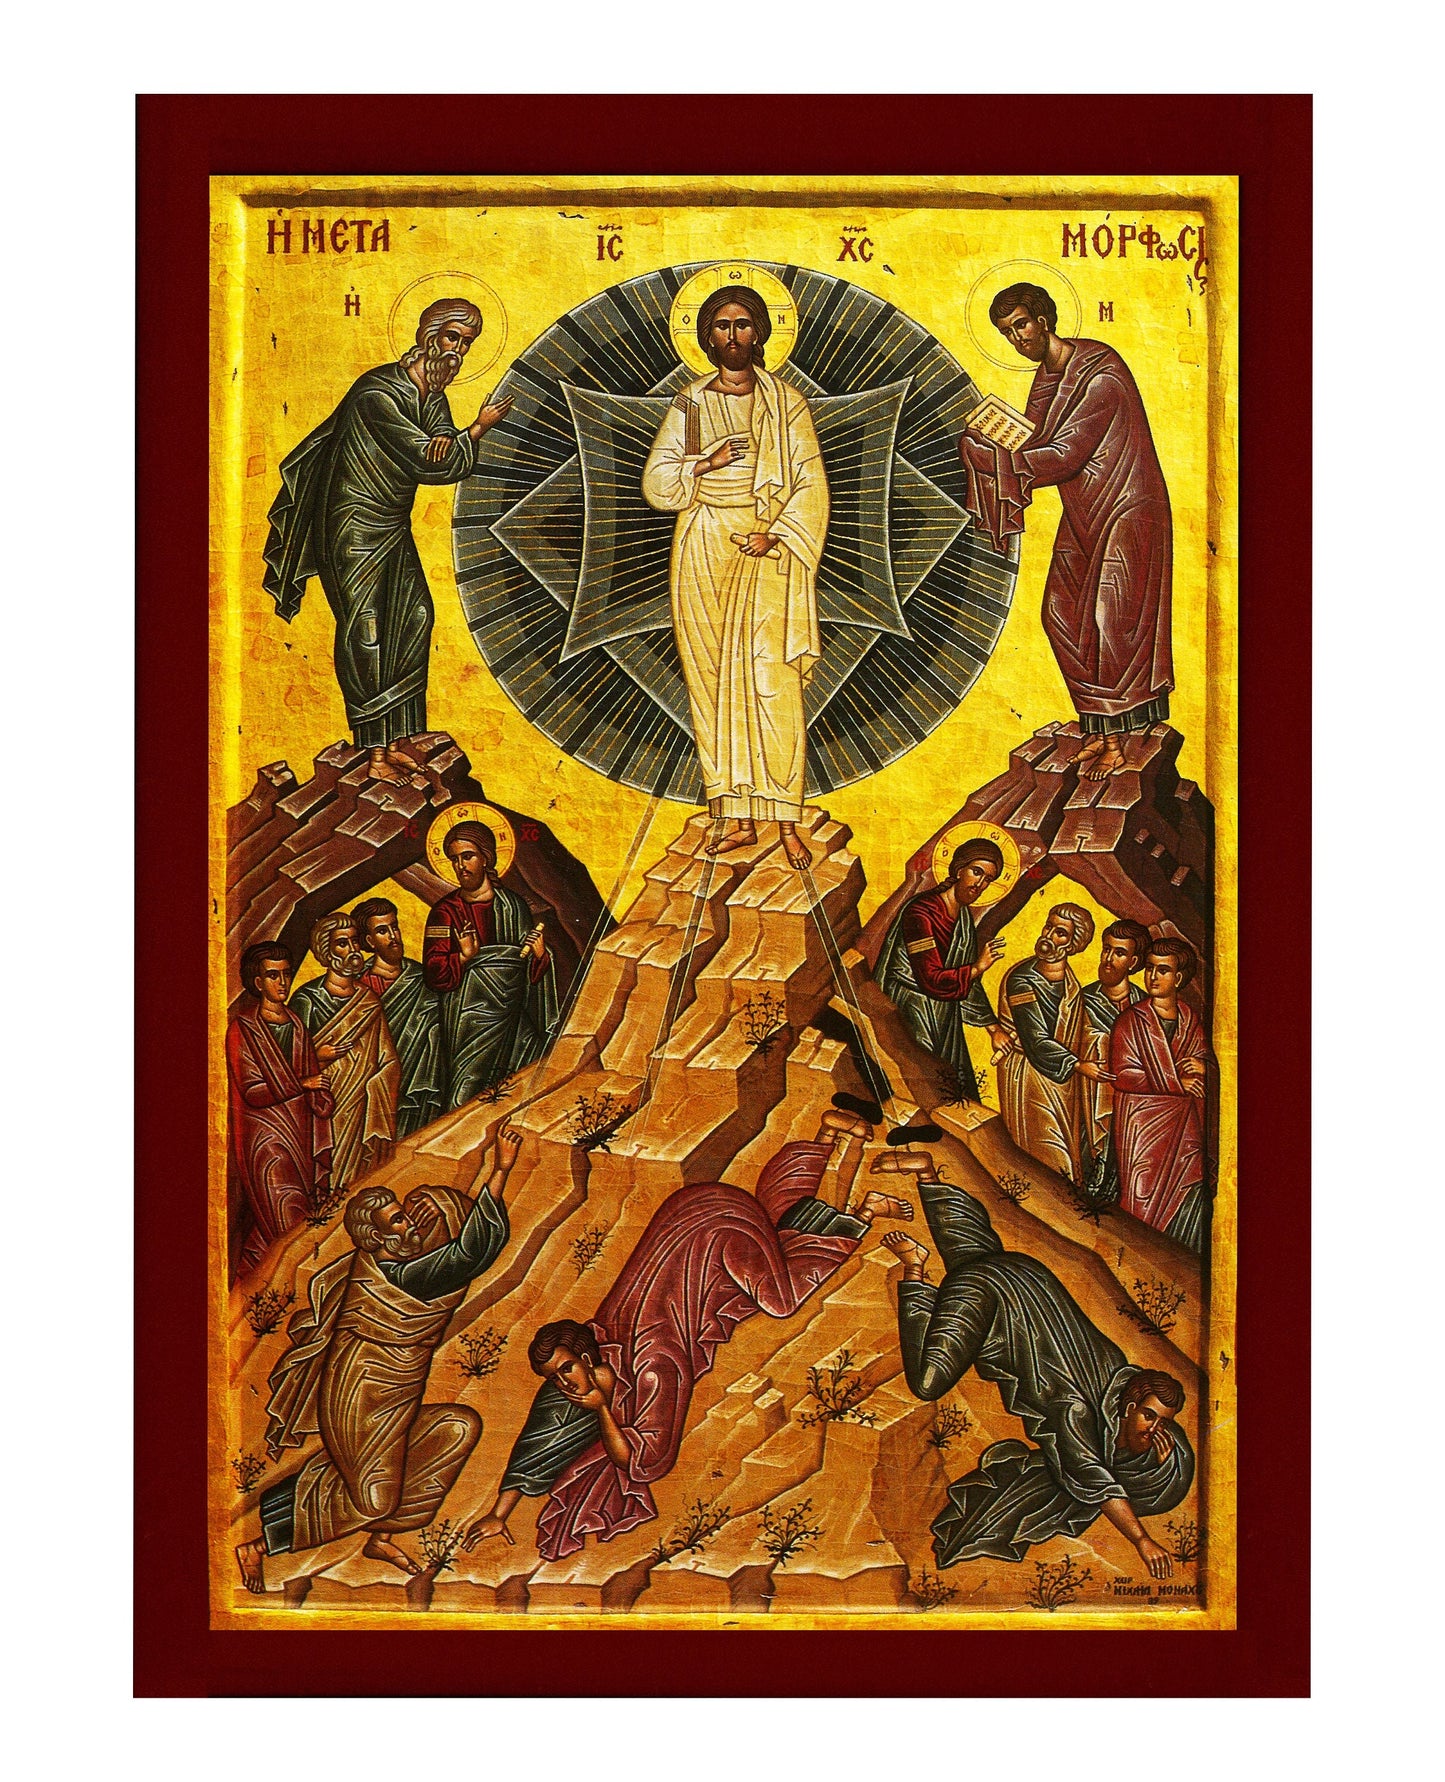 Metamorphosis Jesus Christ icon, Handmade Greek Orthodox icon of the Transfiguration, Byzantine art wall hanging wood plaque, religious gift TheHolyArt